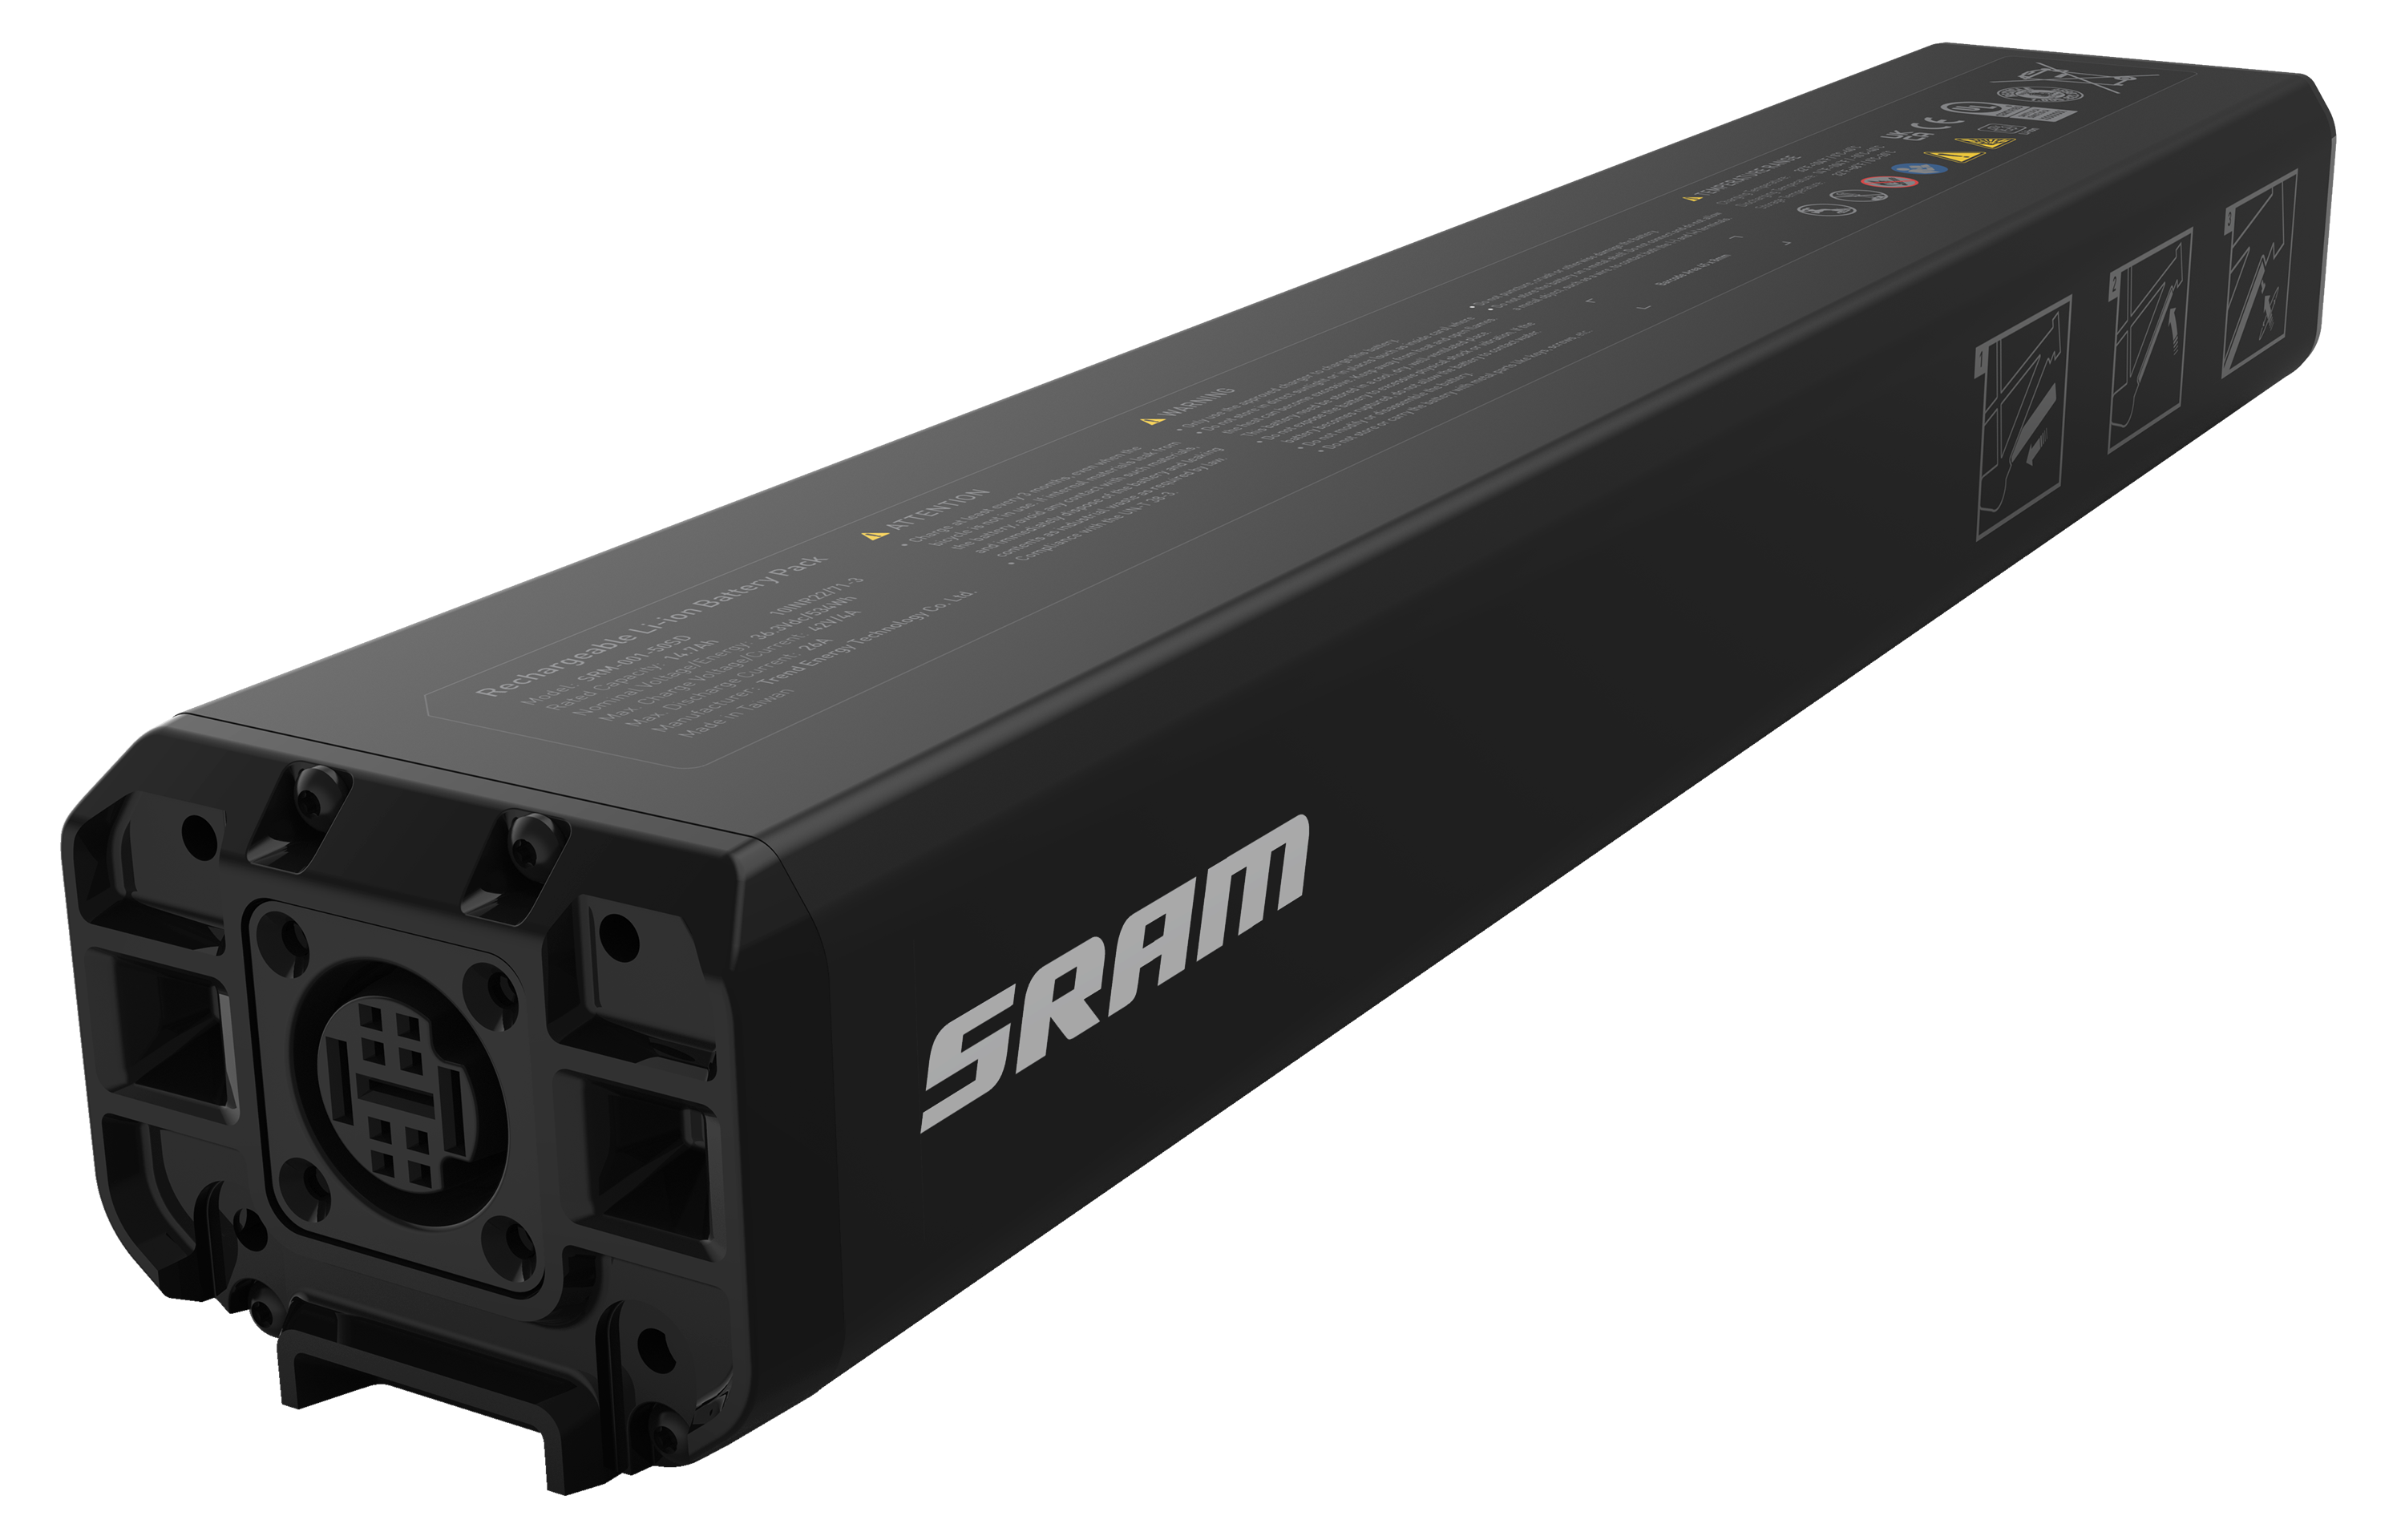 Simon Stewart reviews the SRAM Eagle Powertrain for Blister